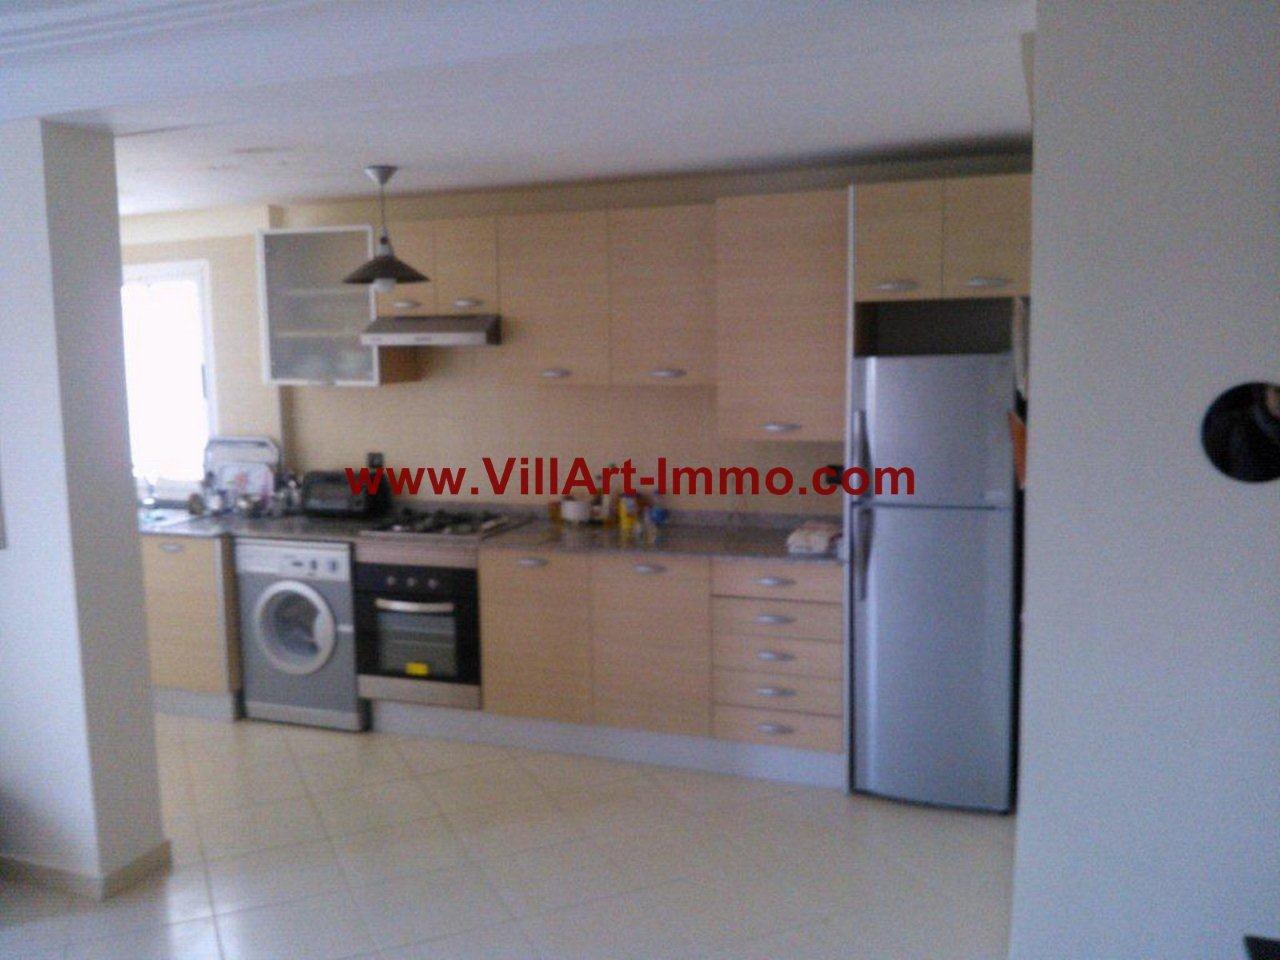 5-Vente-Appartement-Assilah-Cuisine-VA290-Villart-immo